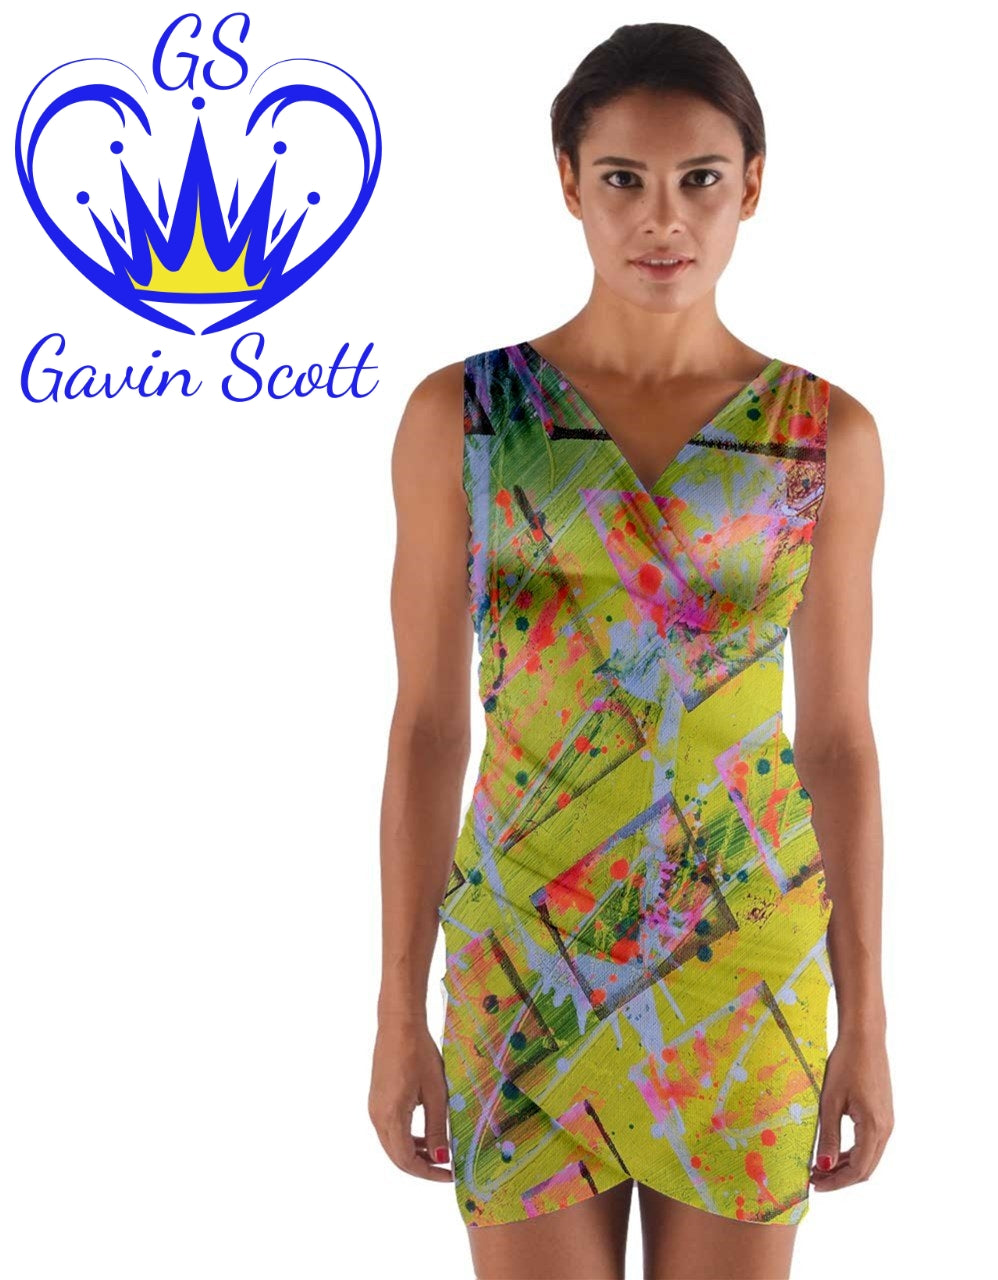 Gavin Scott Wrap Front Bodycon Dress (Femme XS-3XL)